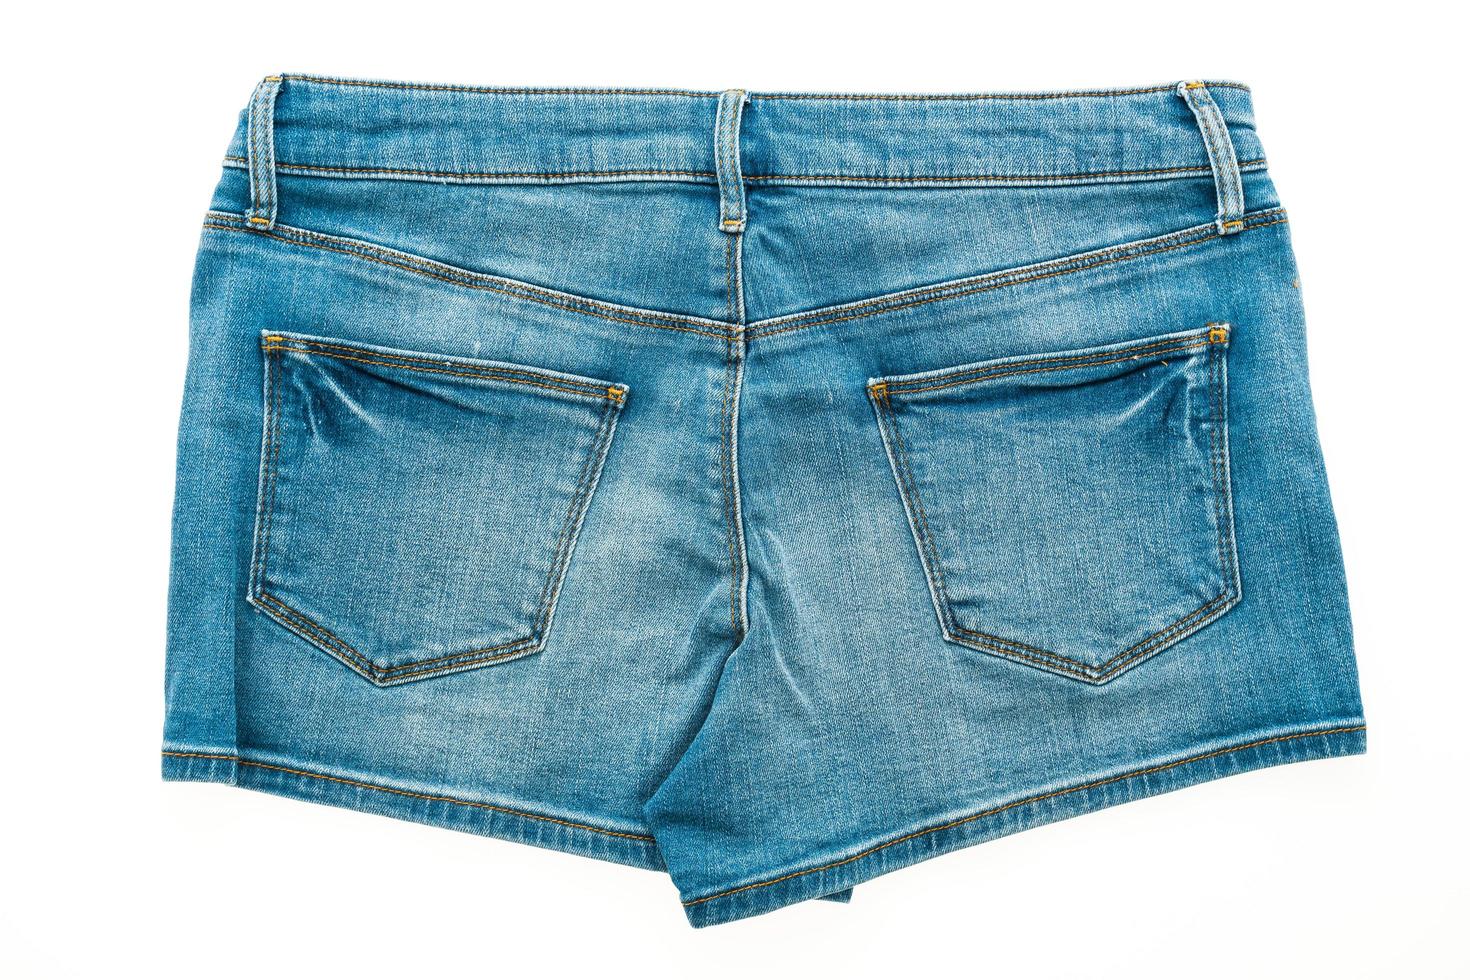 Mode kurze Jeanshosen für Frauen foto